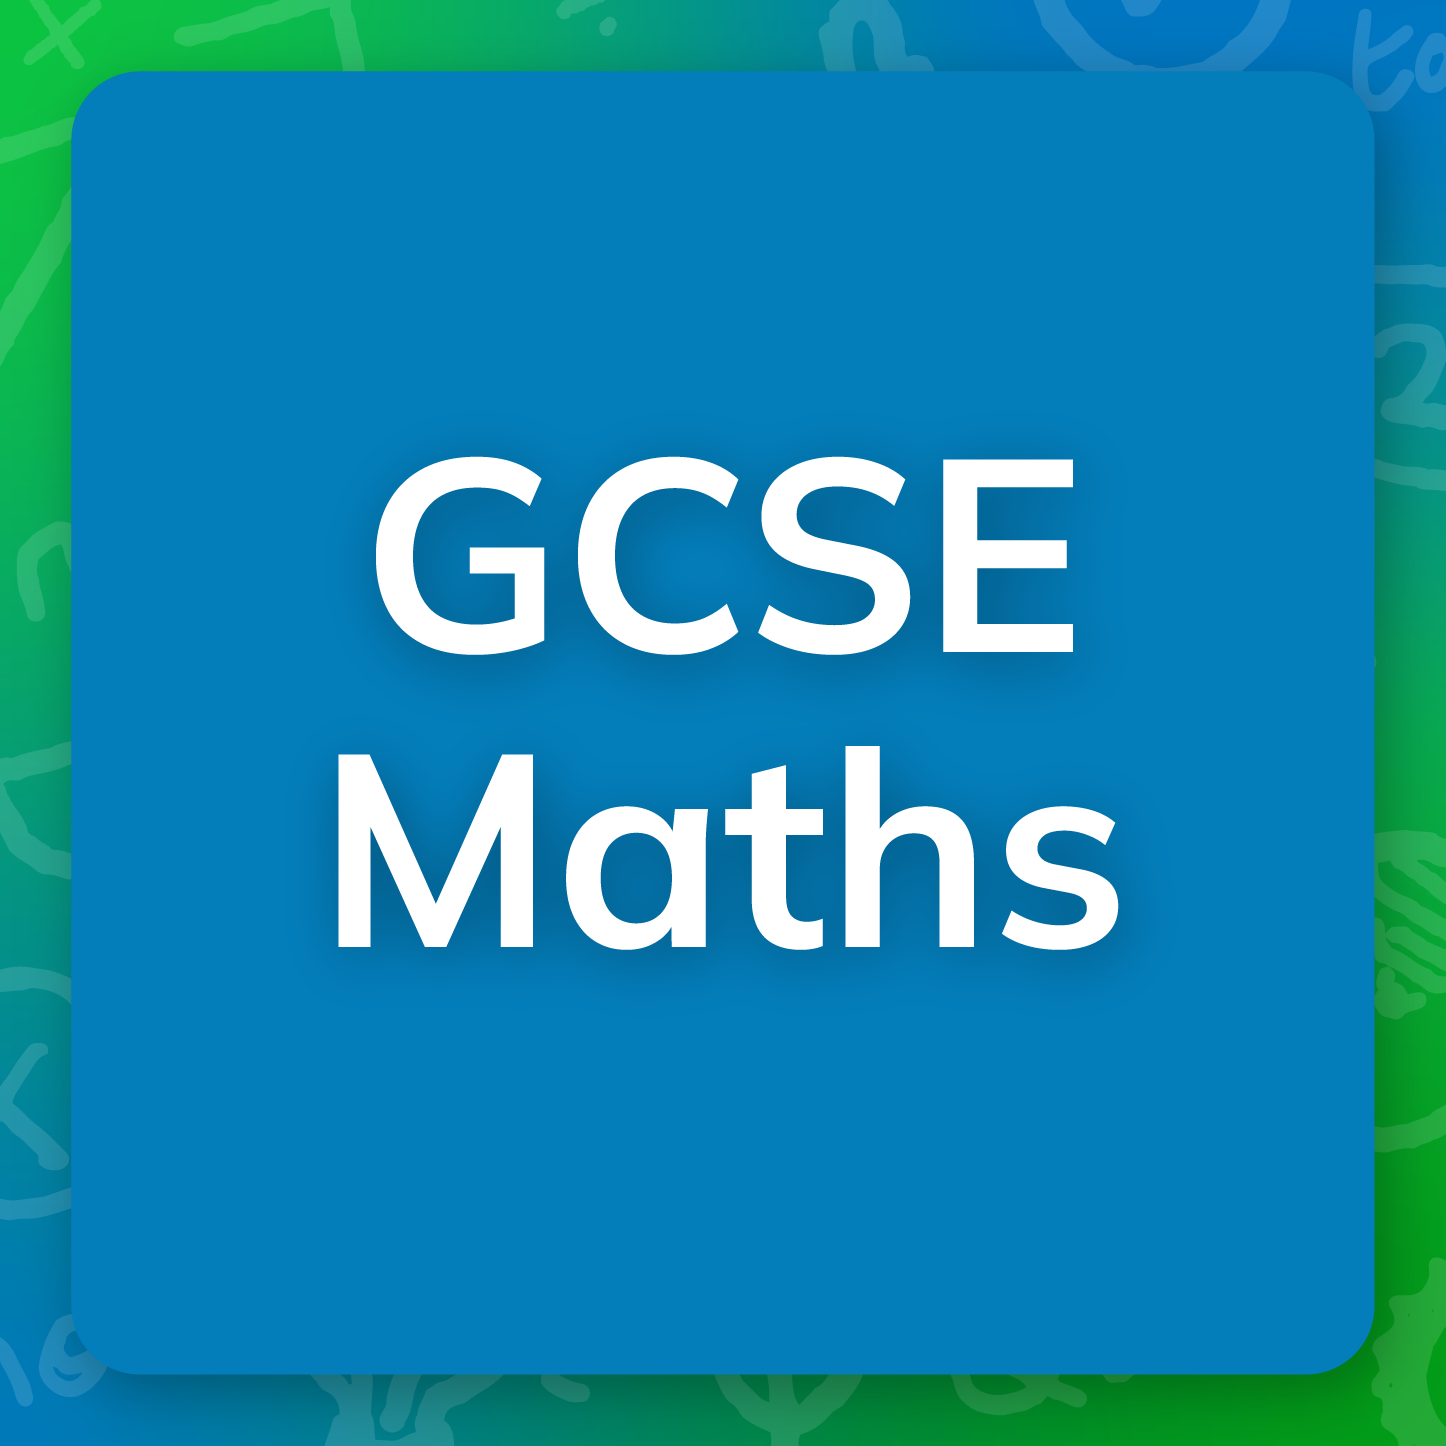 GCSE Maths Cover Image